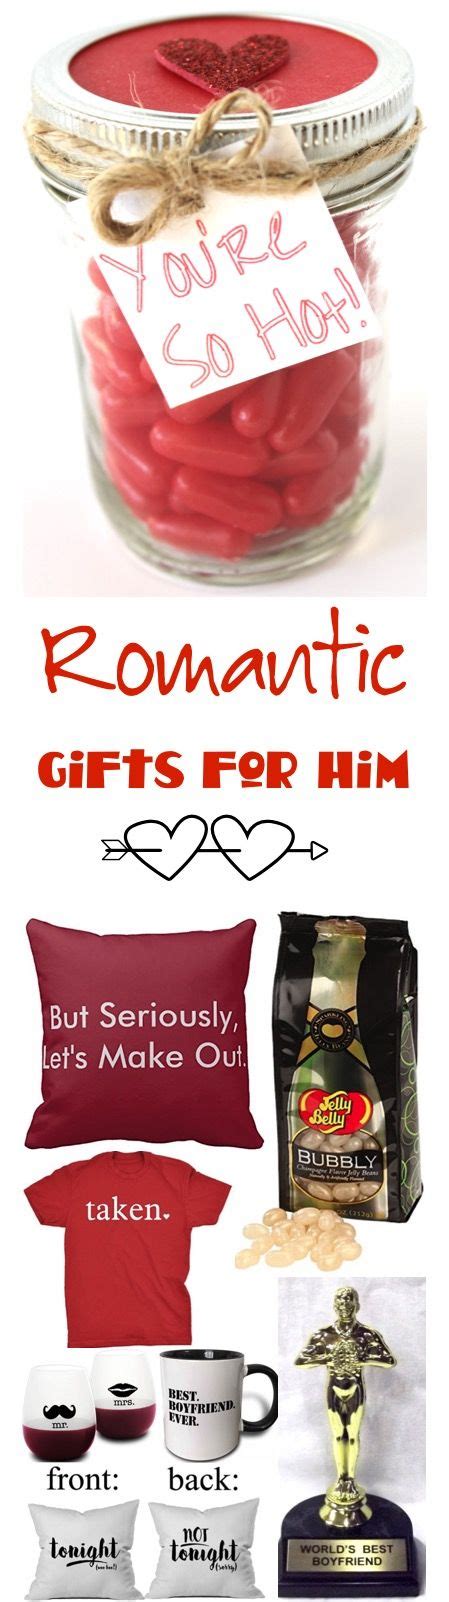 Birthday gifts ideas for boyfriend. Pin on Gift Ideas